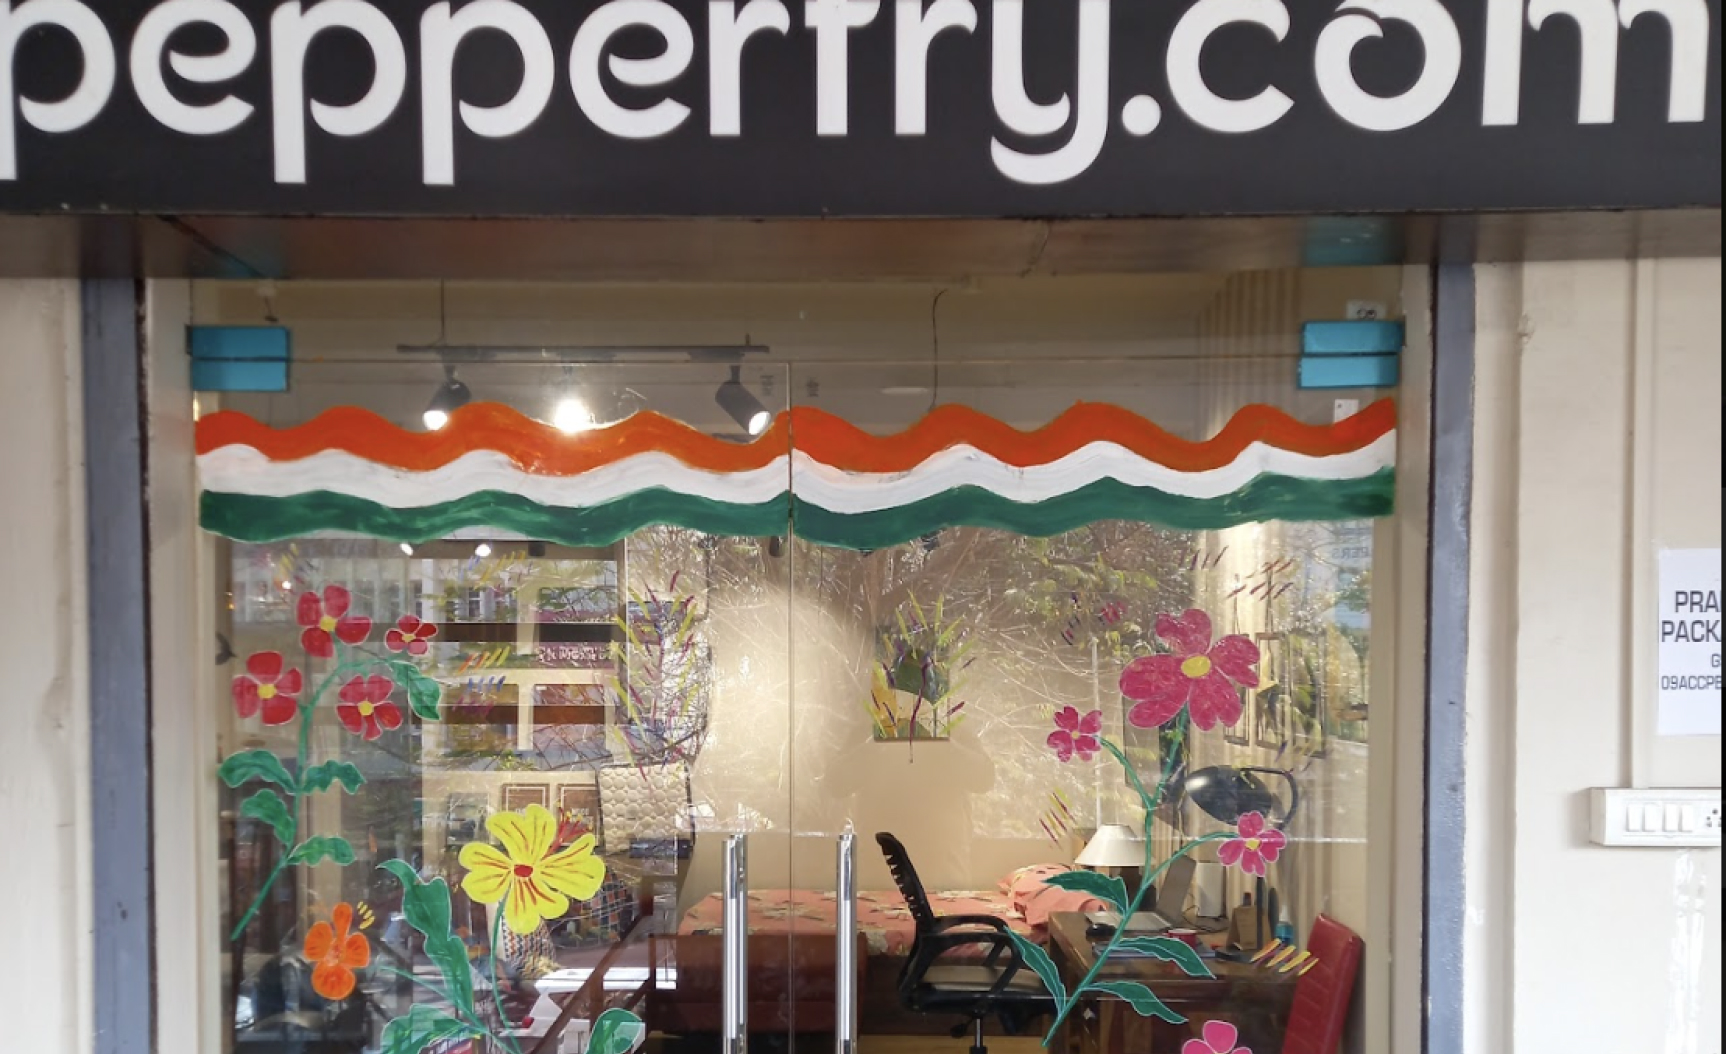 Studio Pepperfry - Prem Nagar, Lucknow